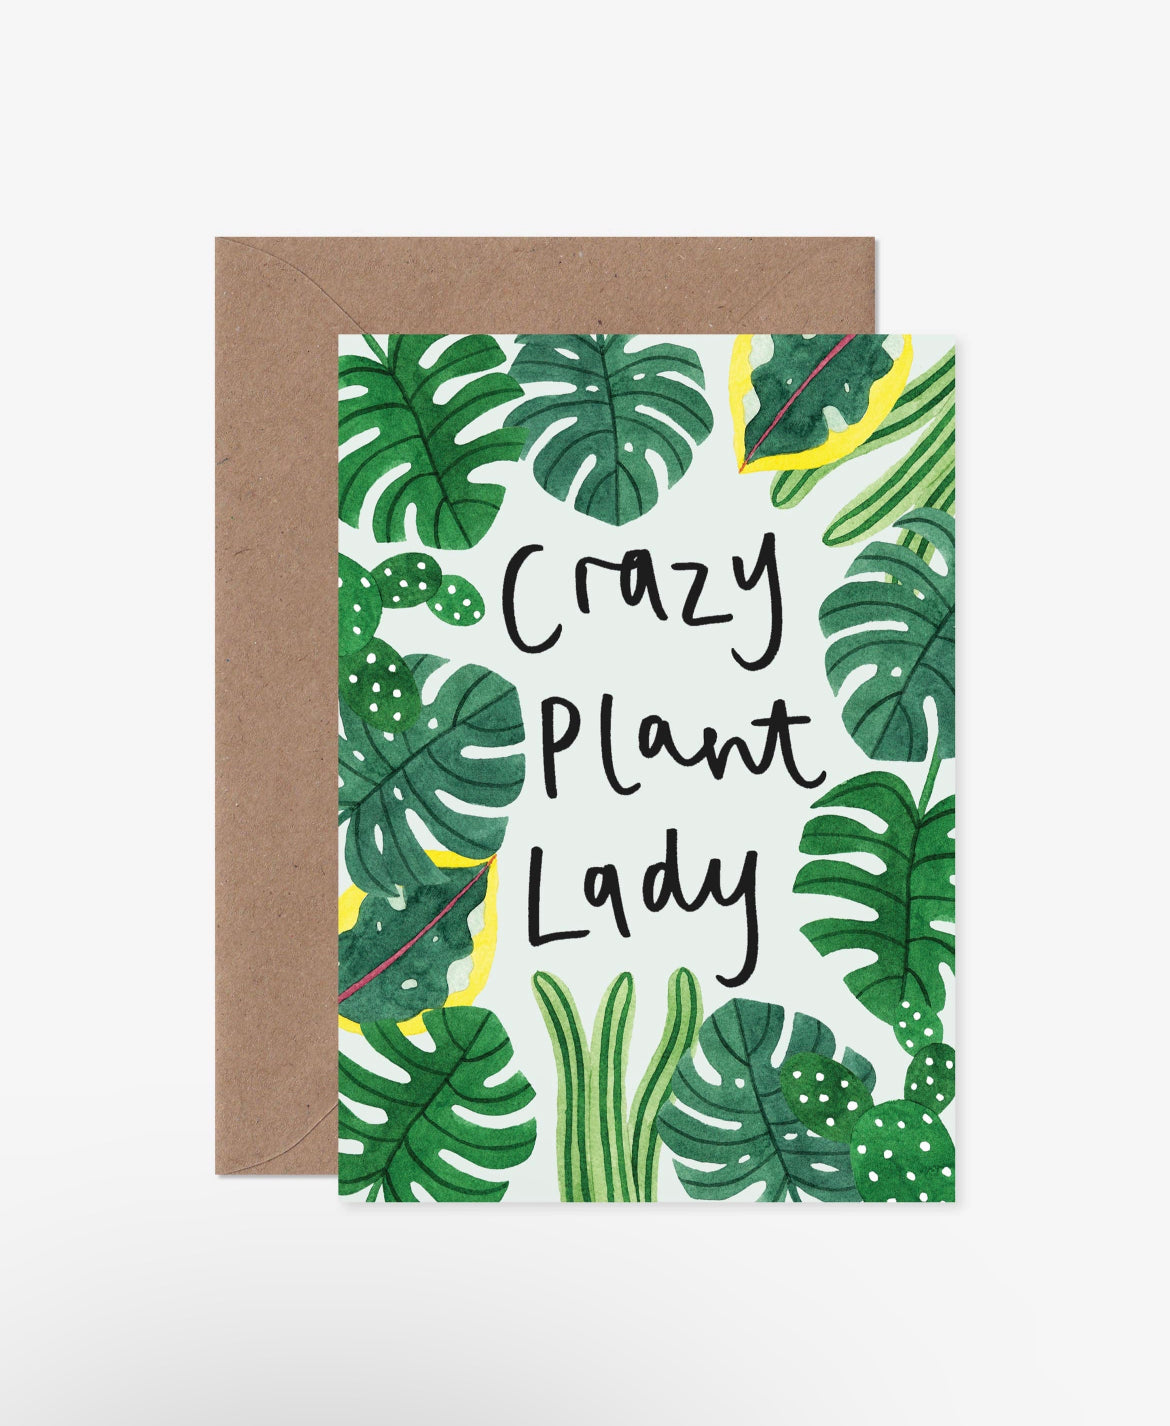 Crazy plant lady card